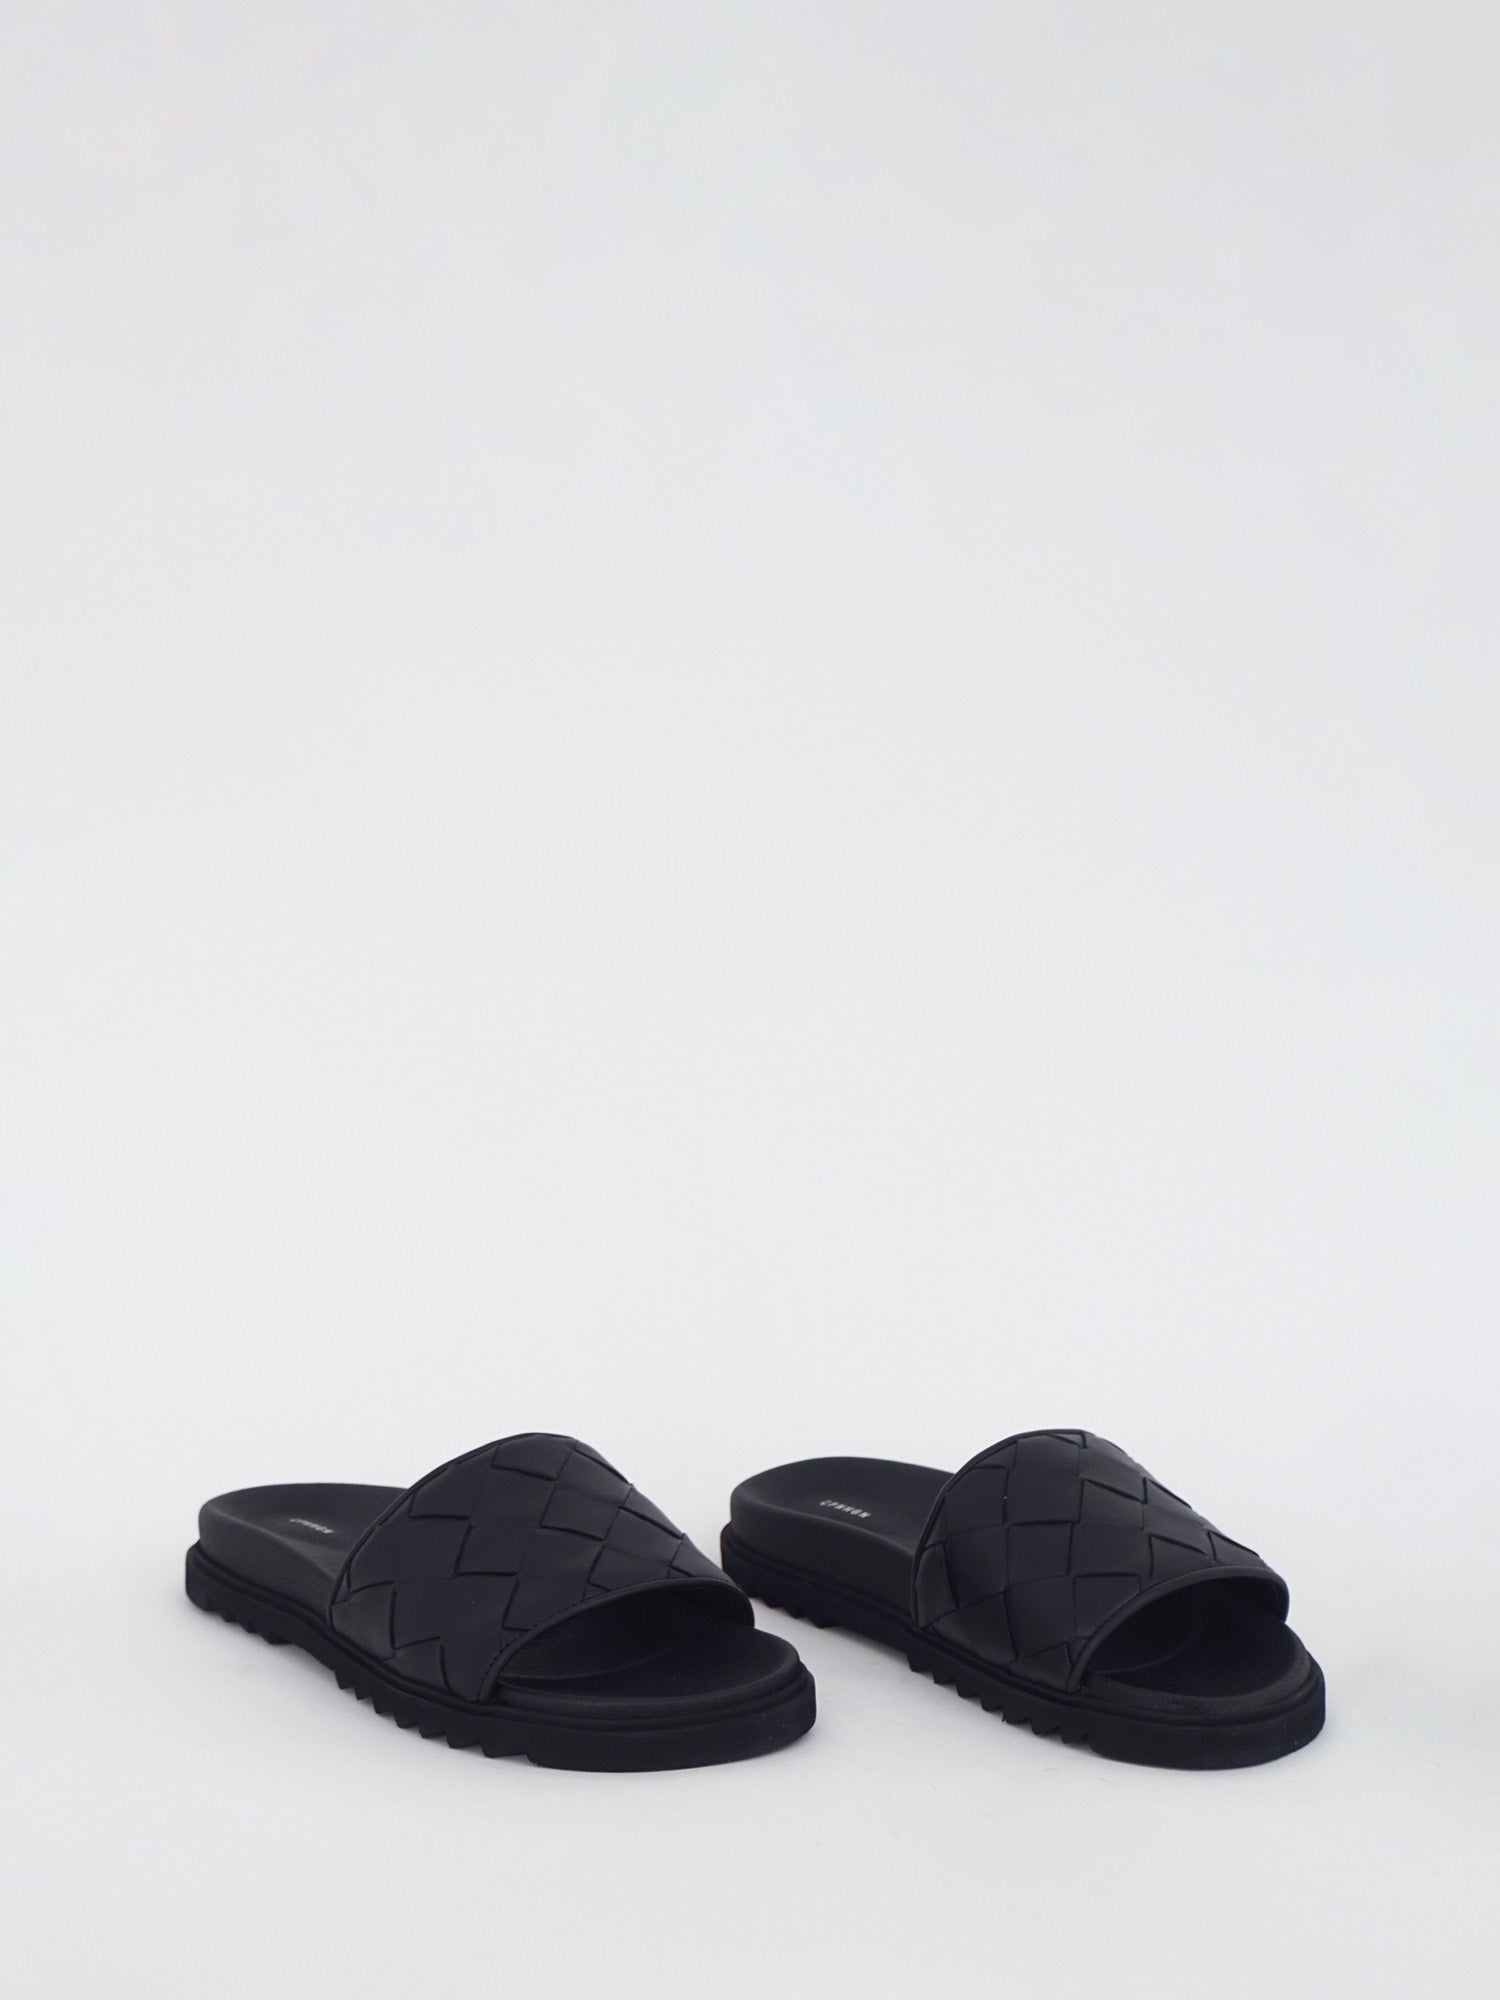 Sandalo fussbett soft nero